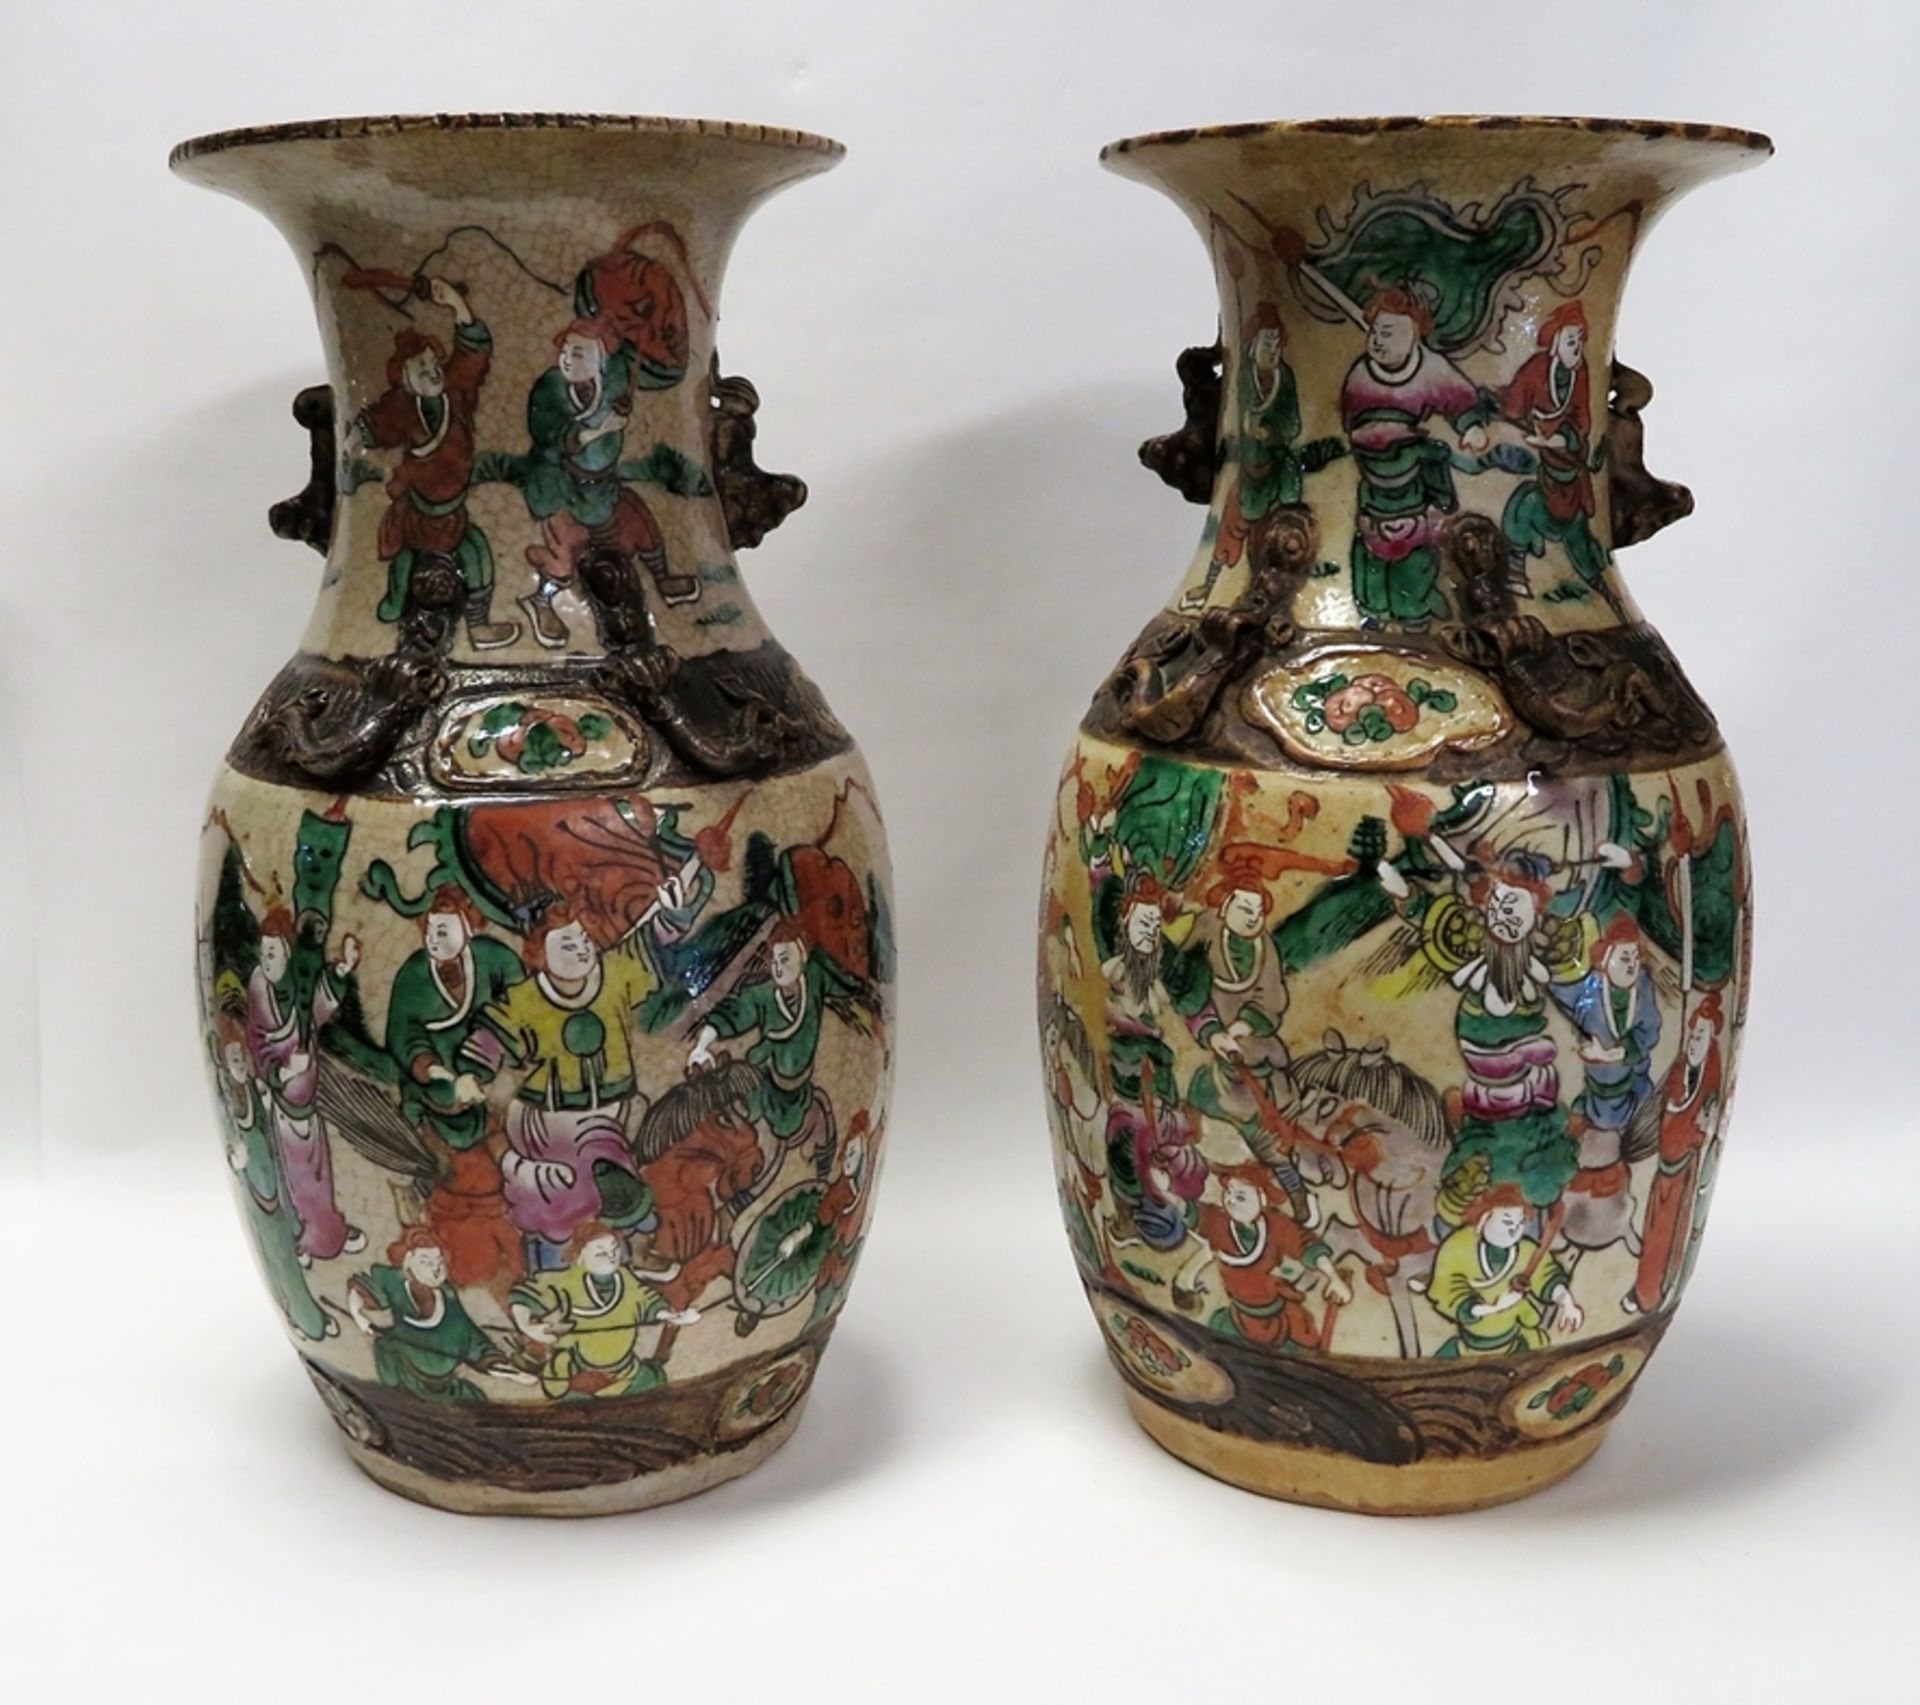 2 Vasen, Kanton China, um 1900, Steingut mit polychromer Bemalung, Bodenmarke,